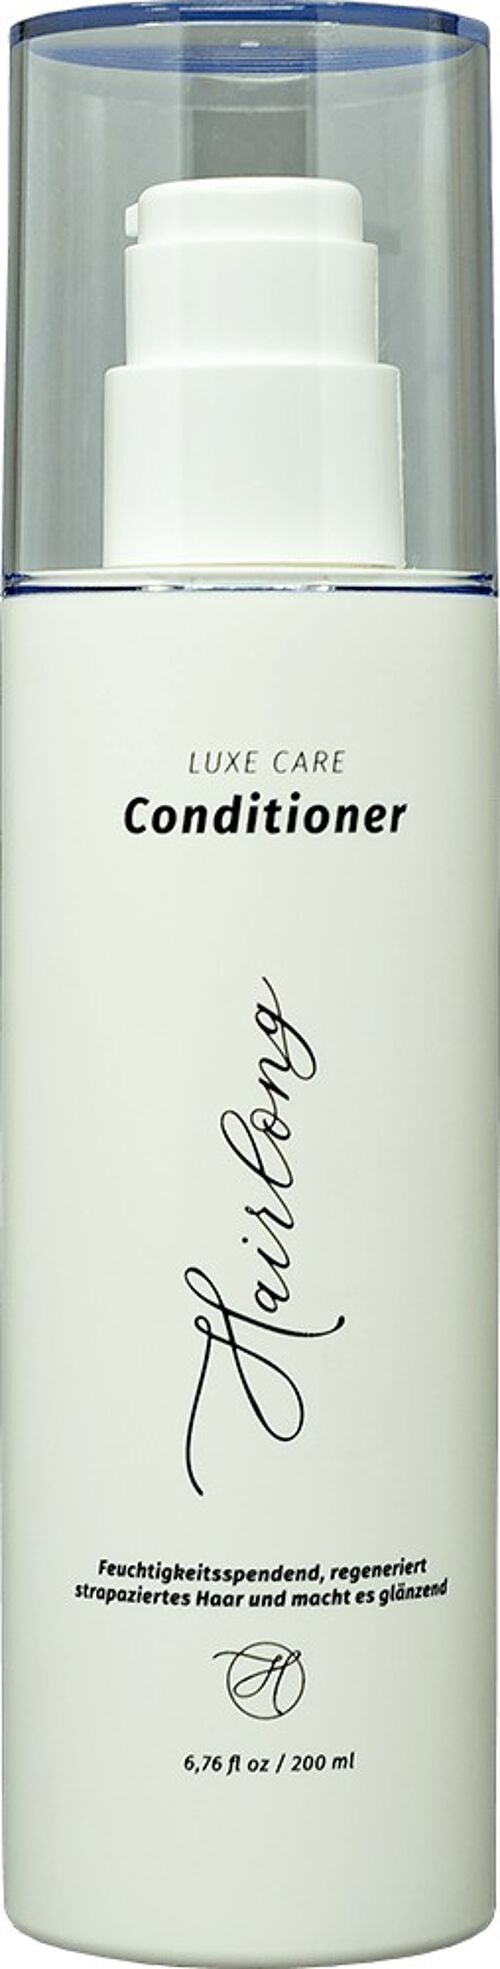 Luxe Care Conditioner